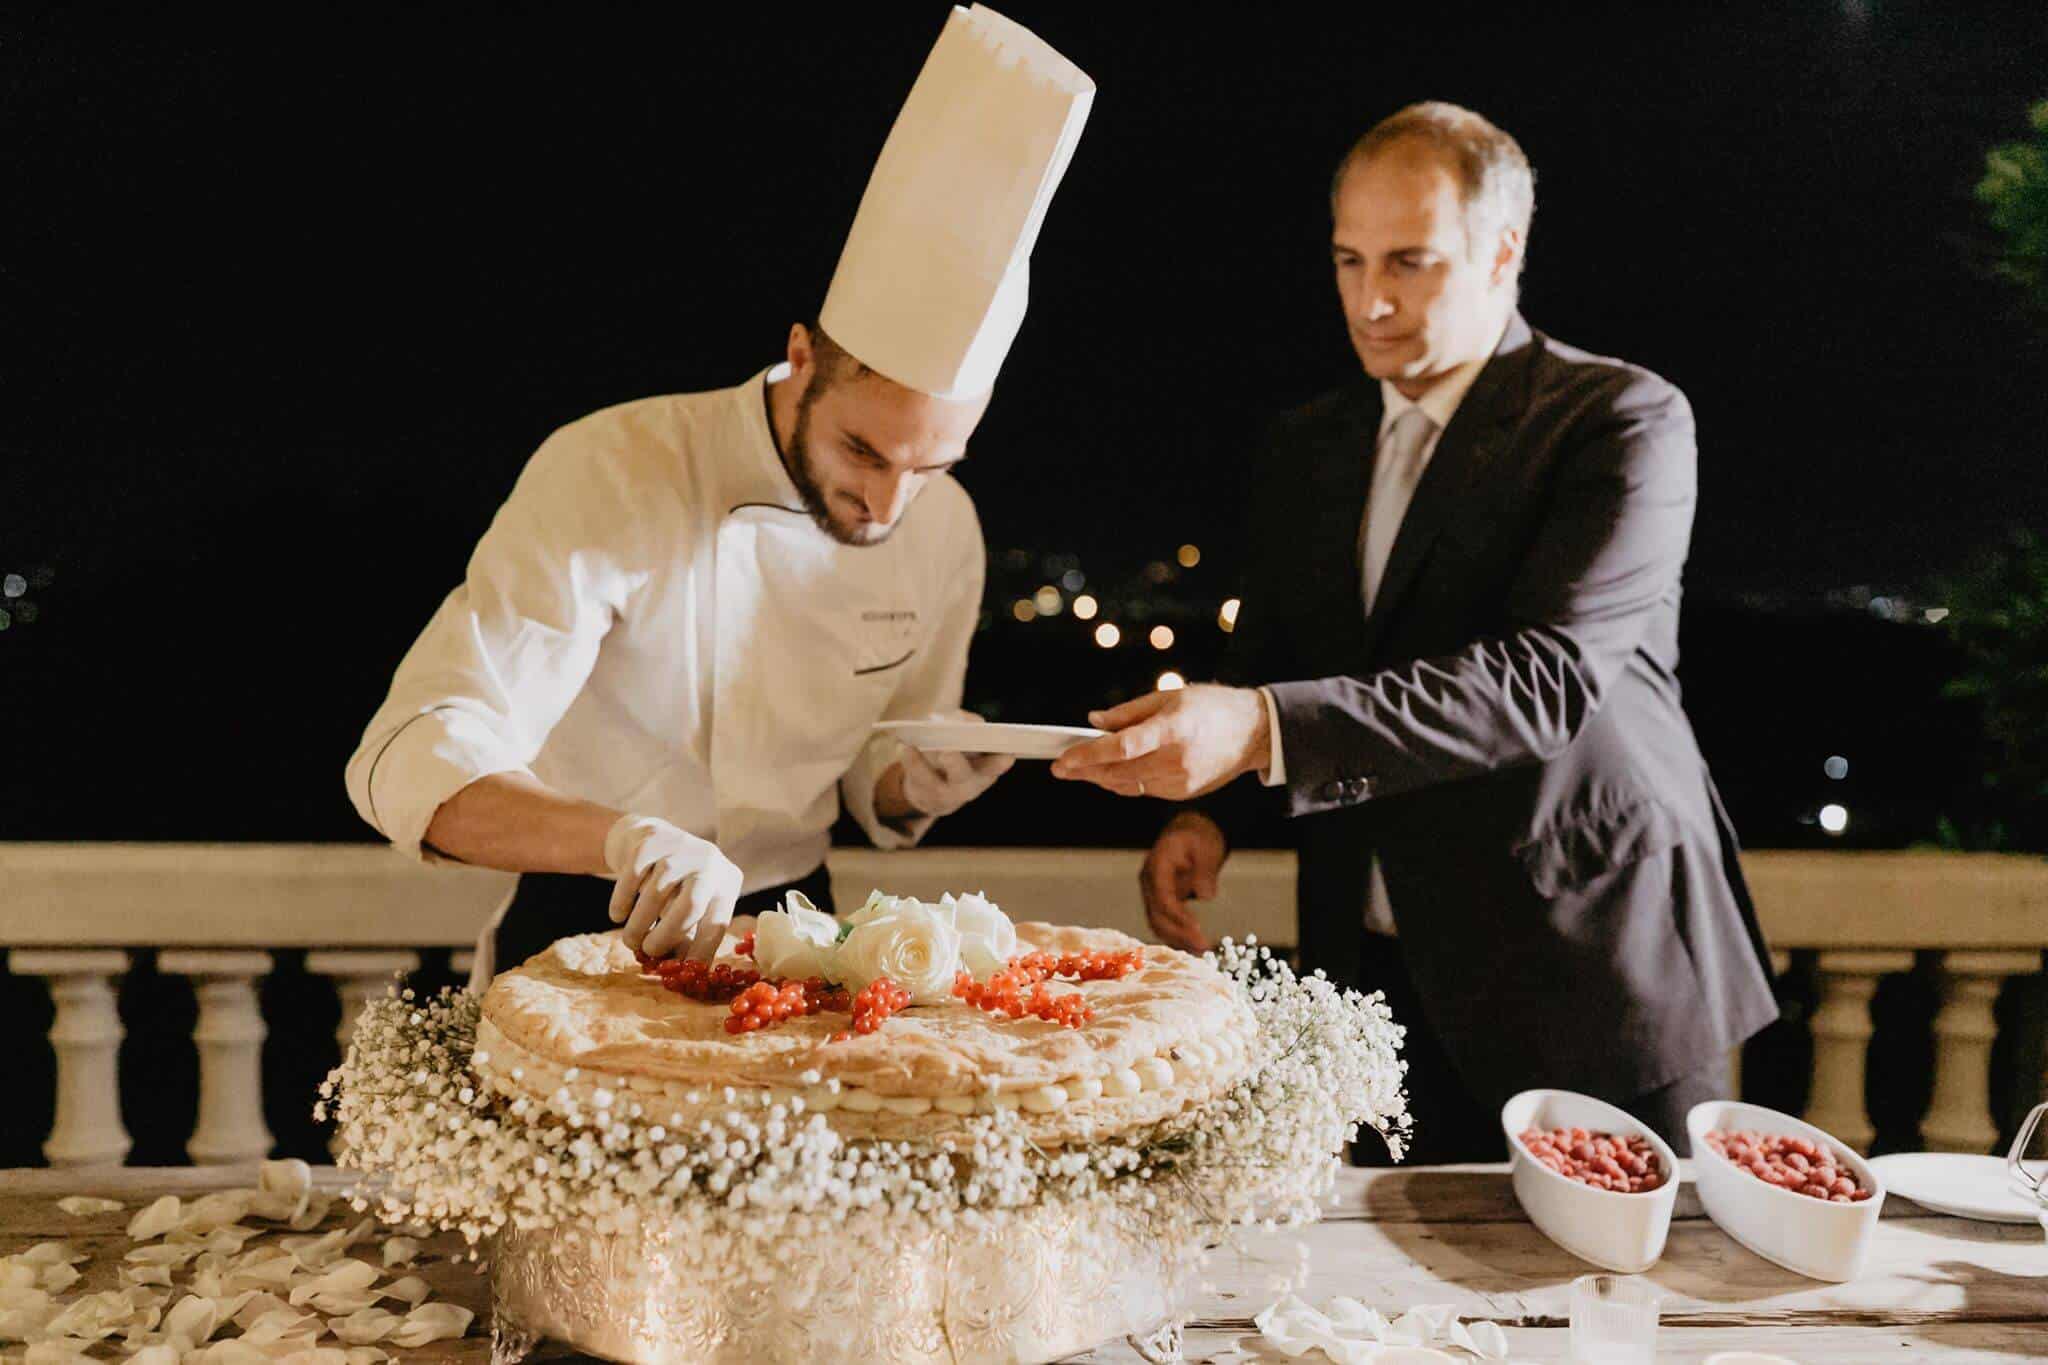 Chef is cutting an Italian wedding Millefoglie Cake